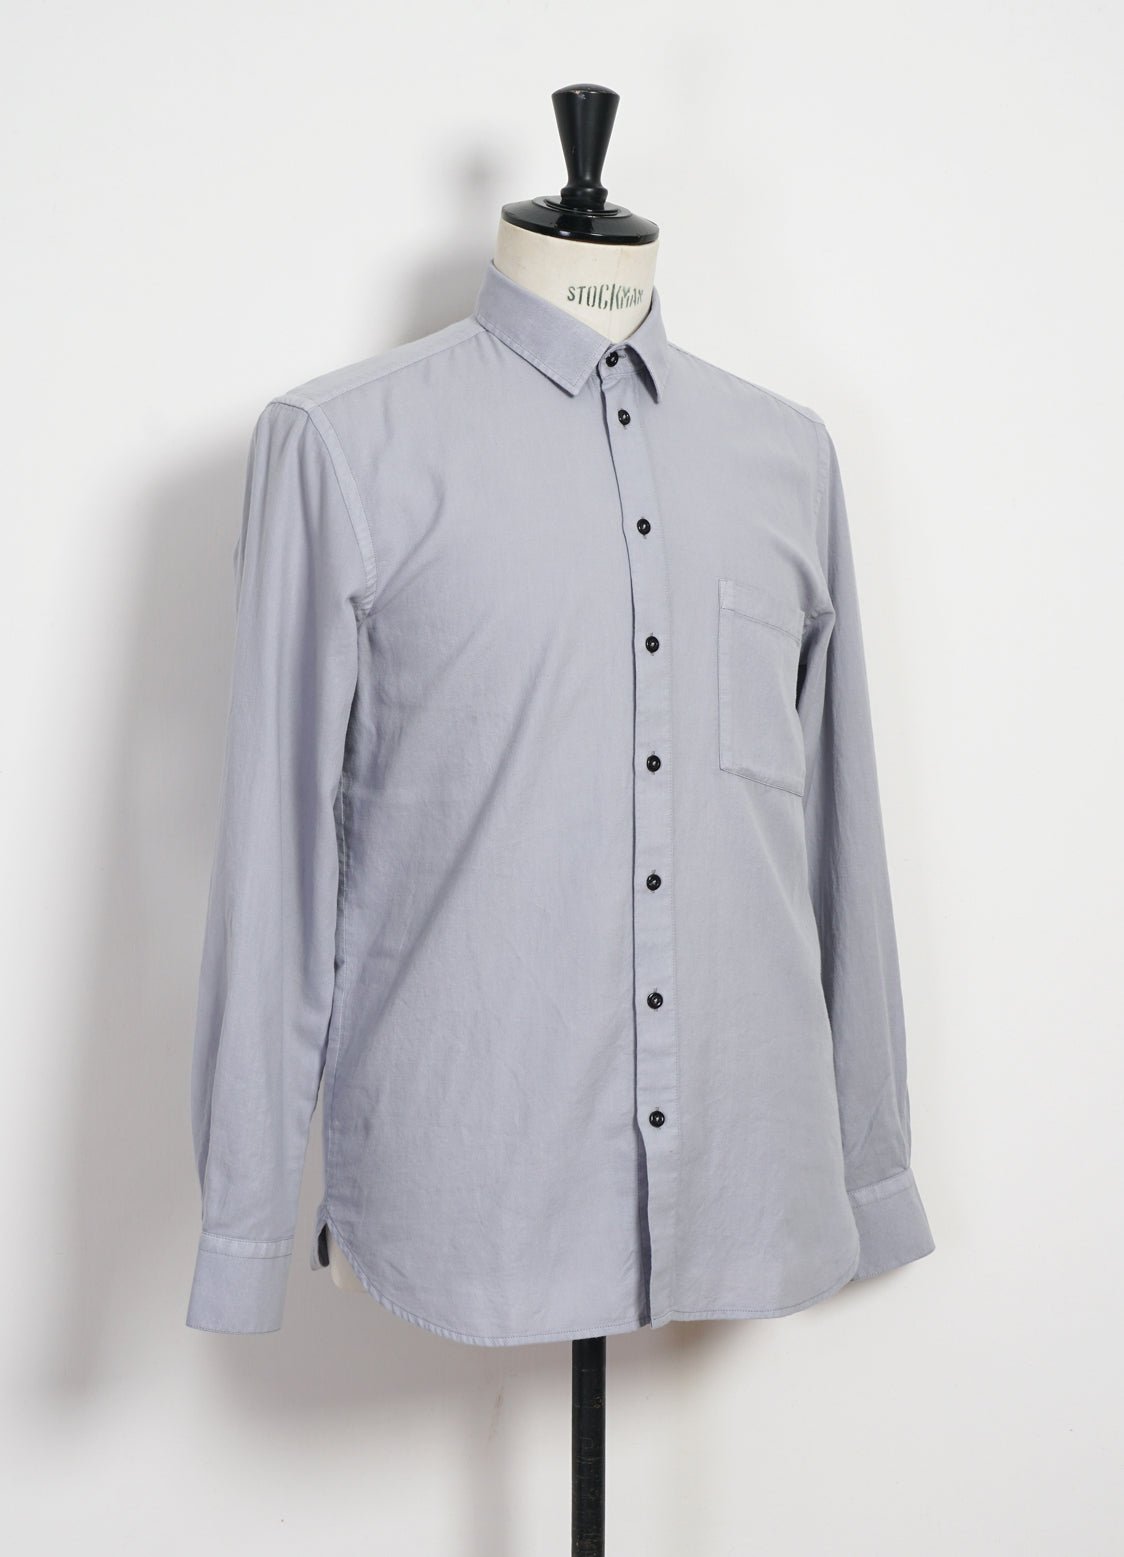 HANSEN GARMENTS - HENNING | Casual Classic Shirt | Rain - HANSEN Garments